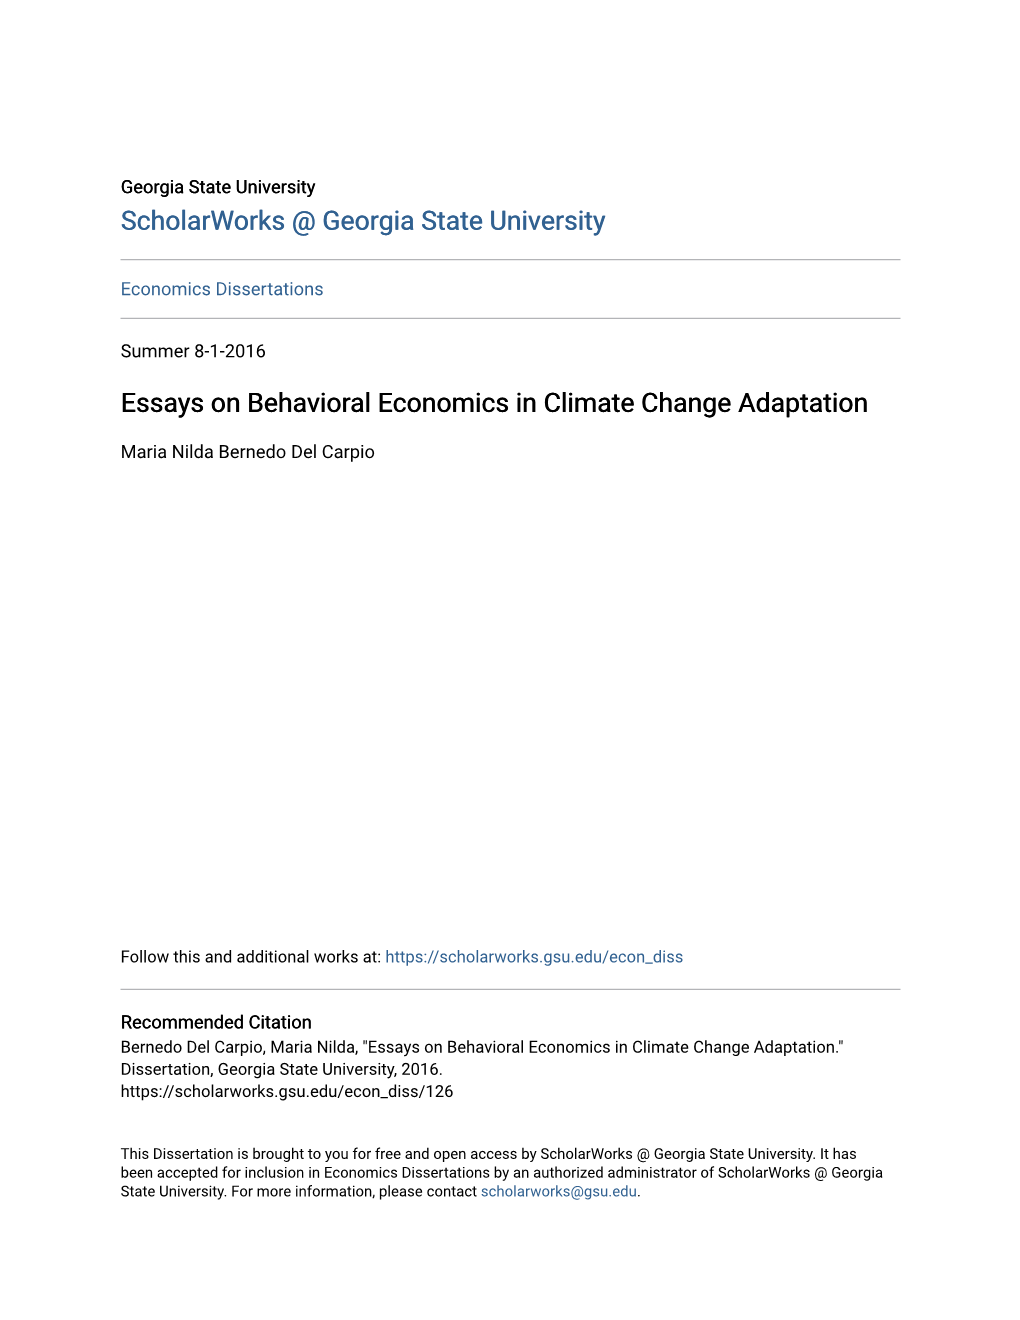 Essays on Behavioral Economics in Climate Change Adaptation